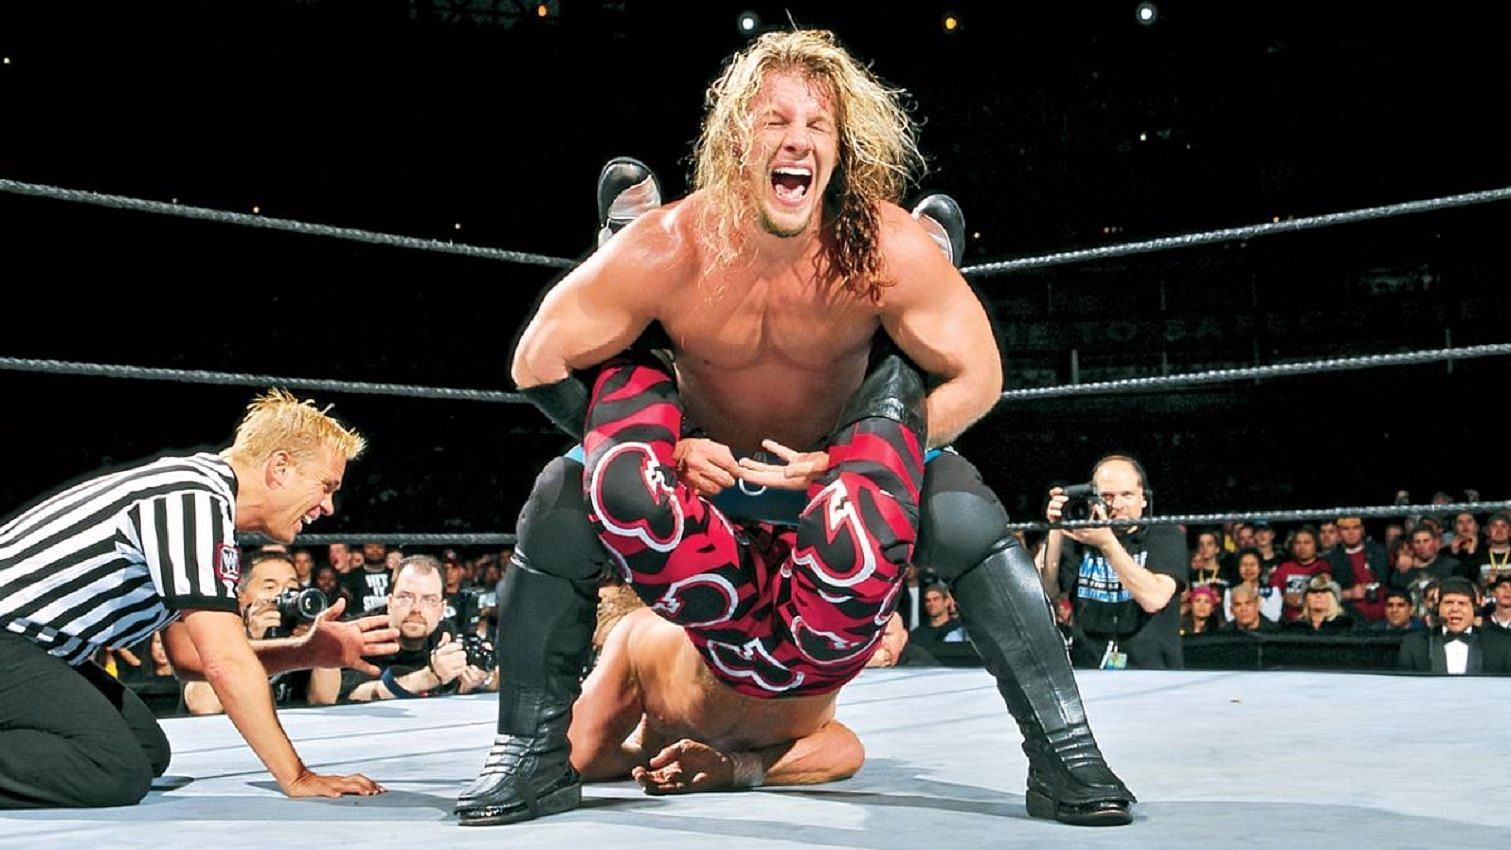 Chris Jericho vs HBK, a dream match we got to see